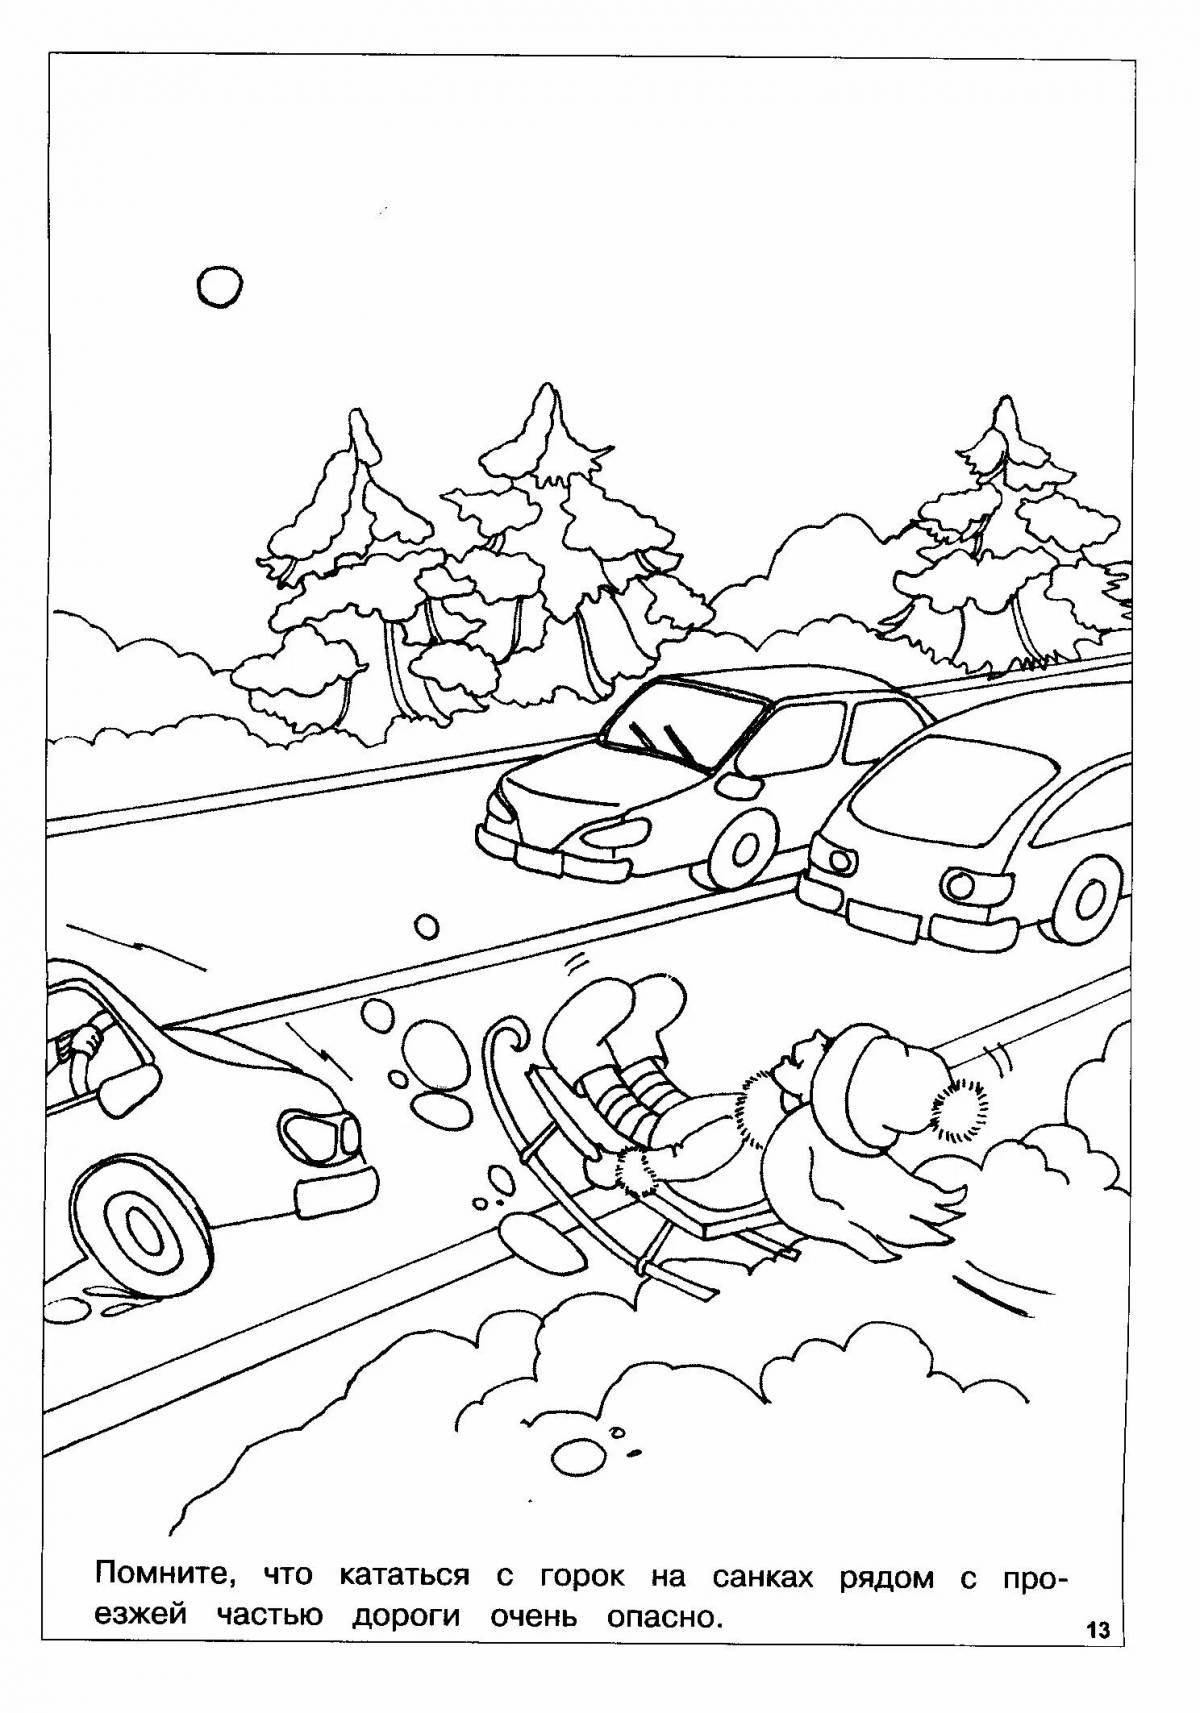 Drawing traffic rules class 2 #4